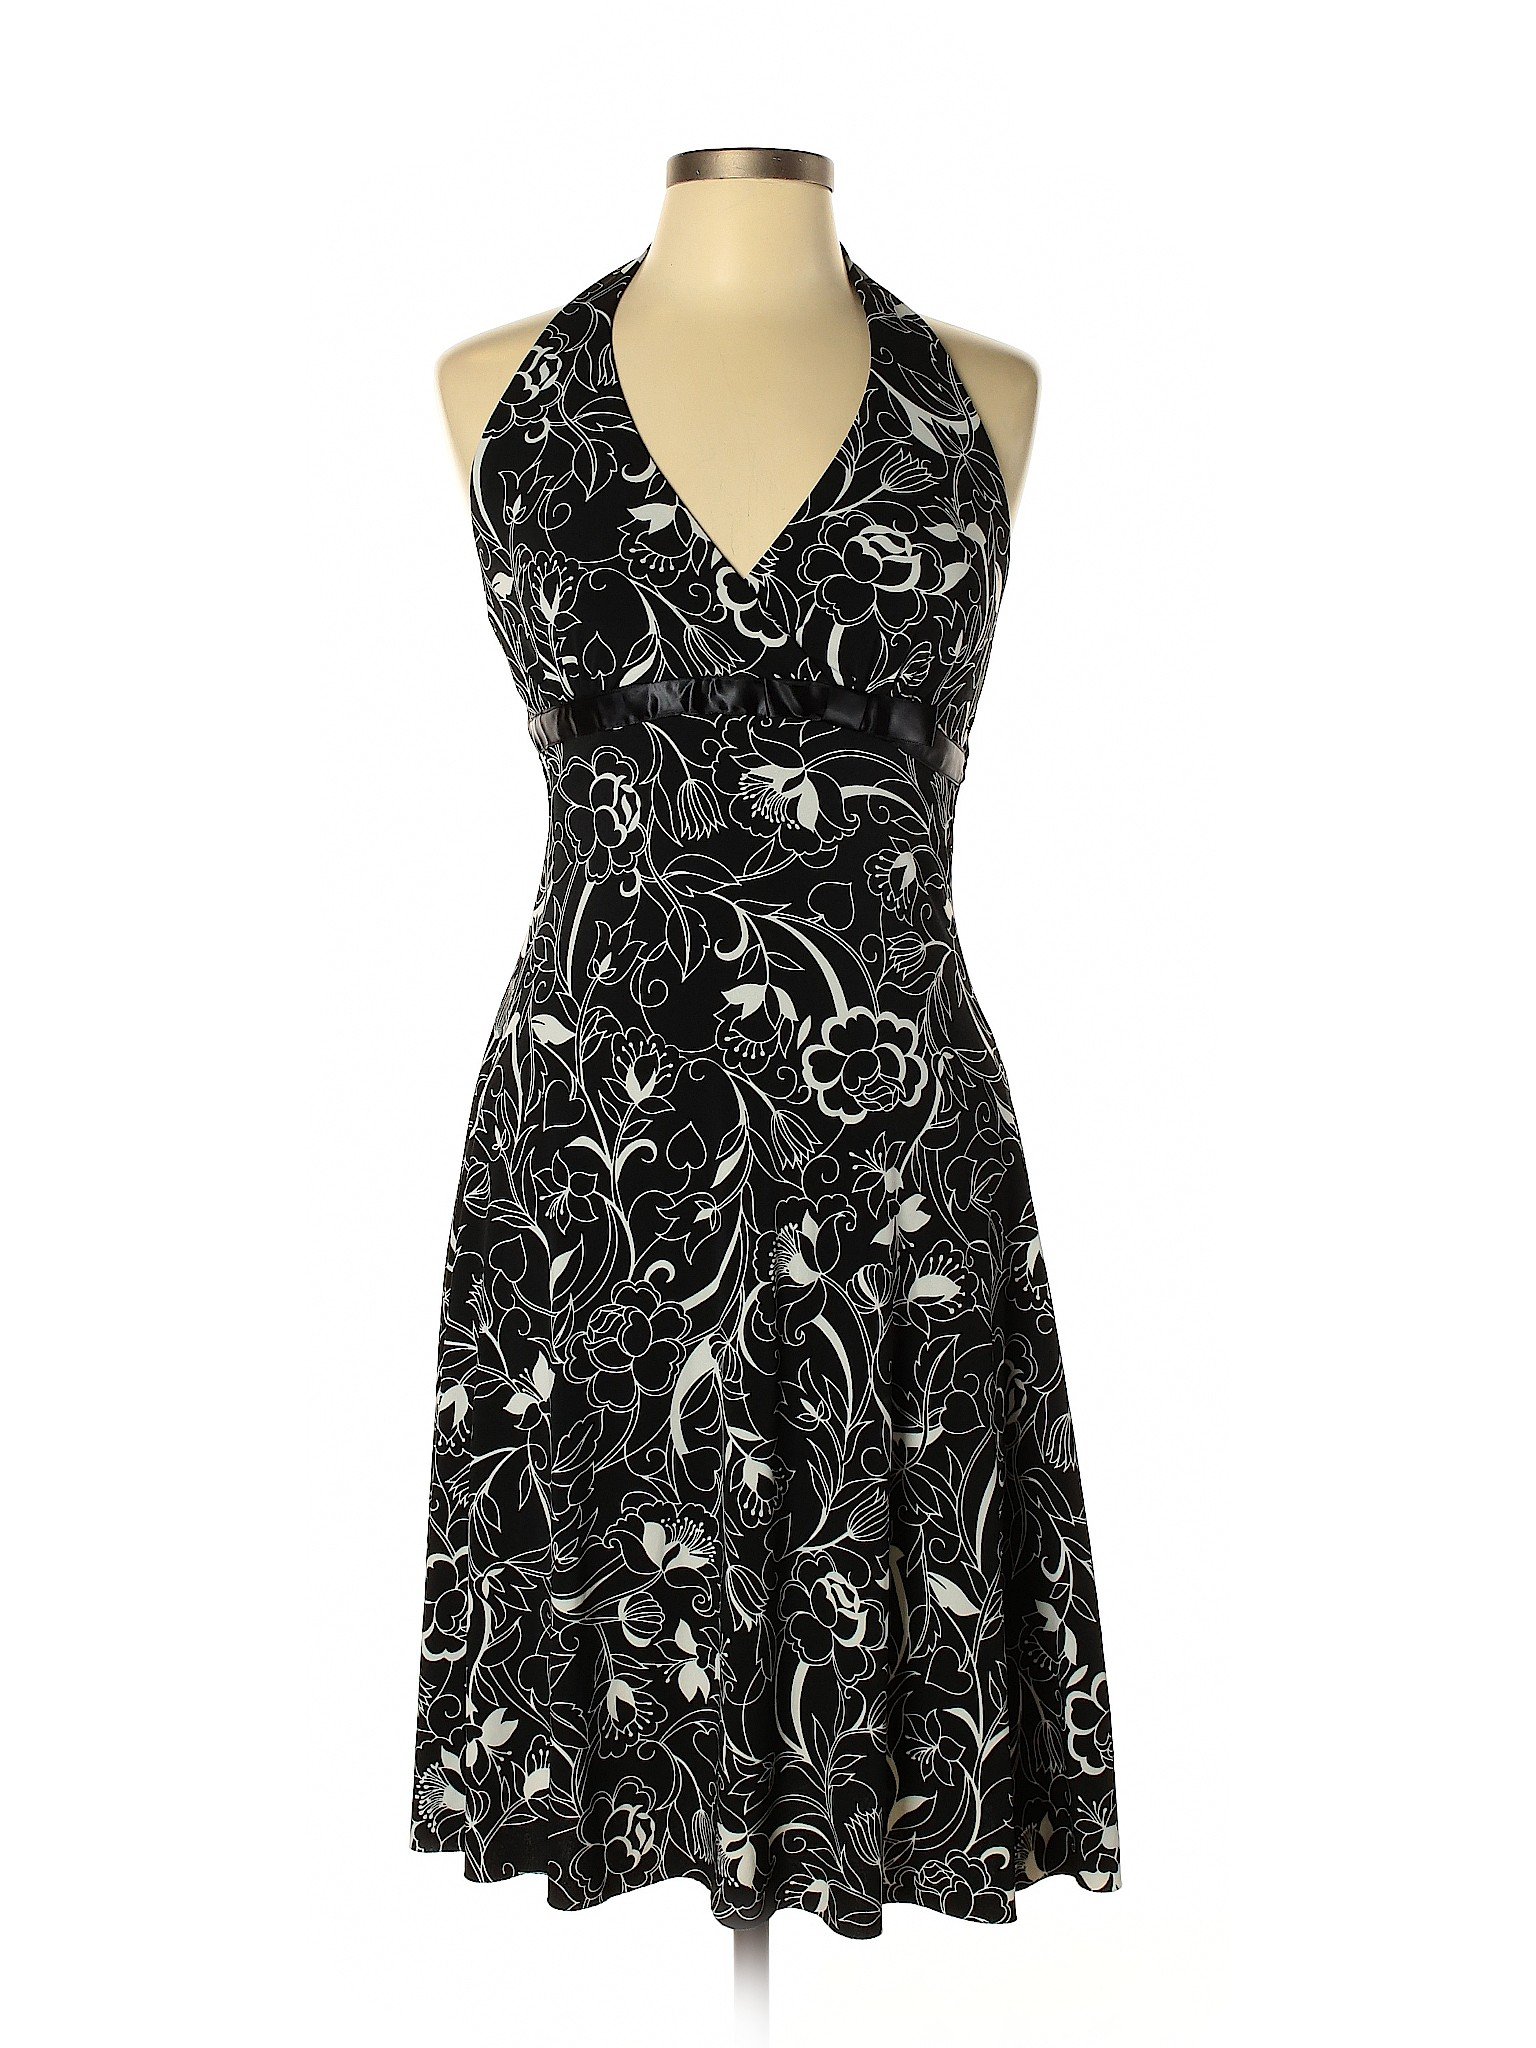 B. Darlin Women Black Cocktail Dress 10 | eBay